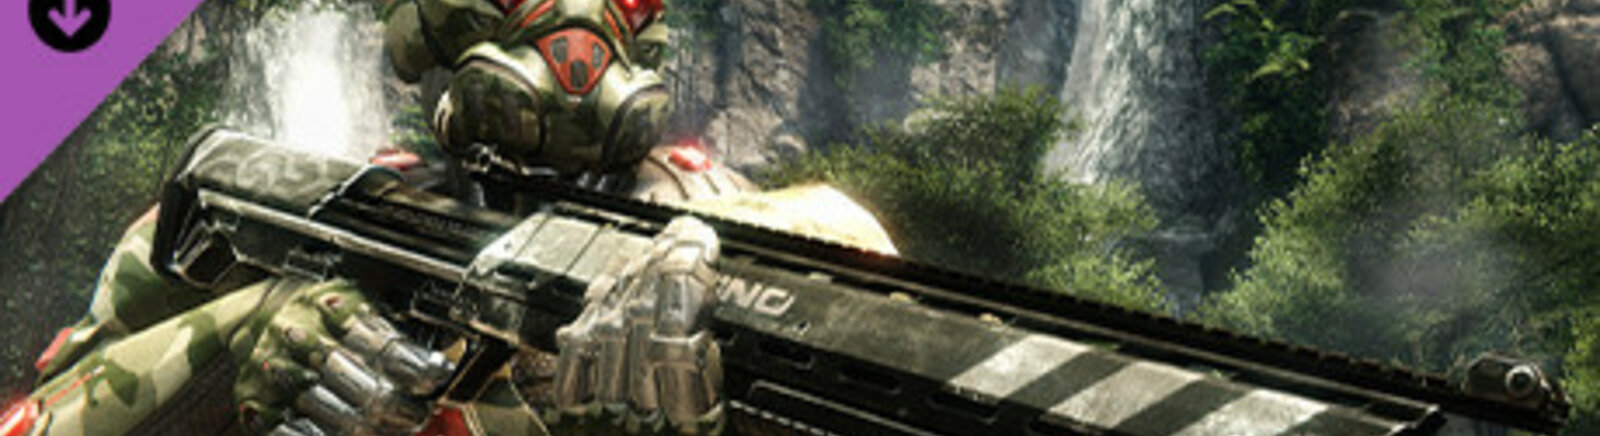 Дата выхода Crysis 3: The Lost Island  на PC, PS3 и Xbox 360 в России и во всем мире